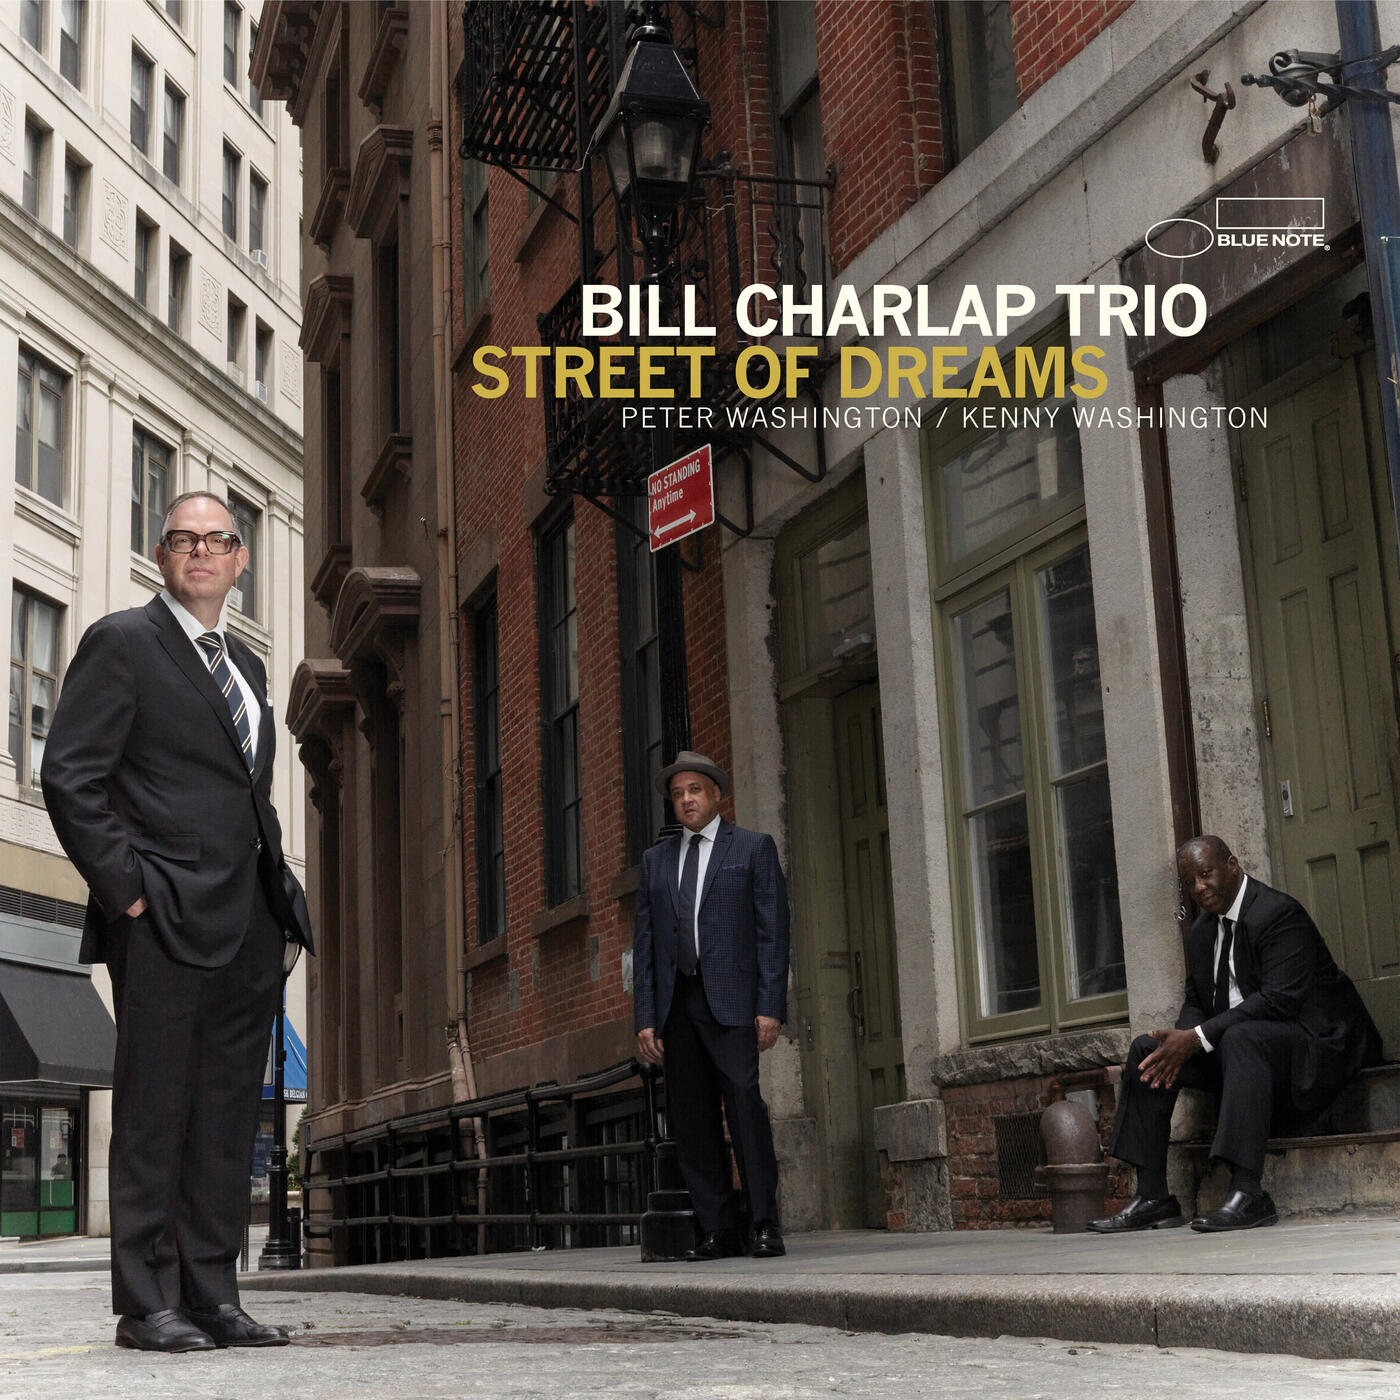 Bill Charlap Trio Street Of Dreams iHeart